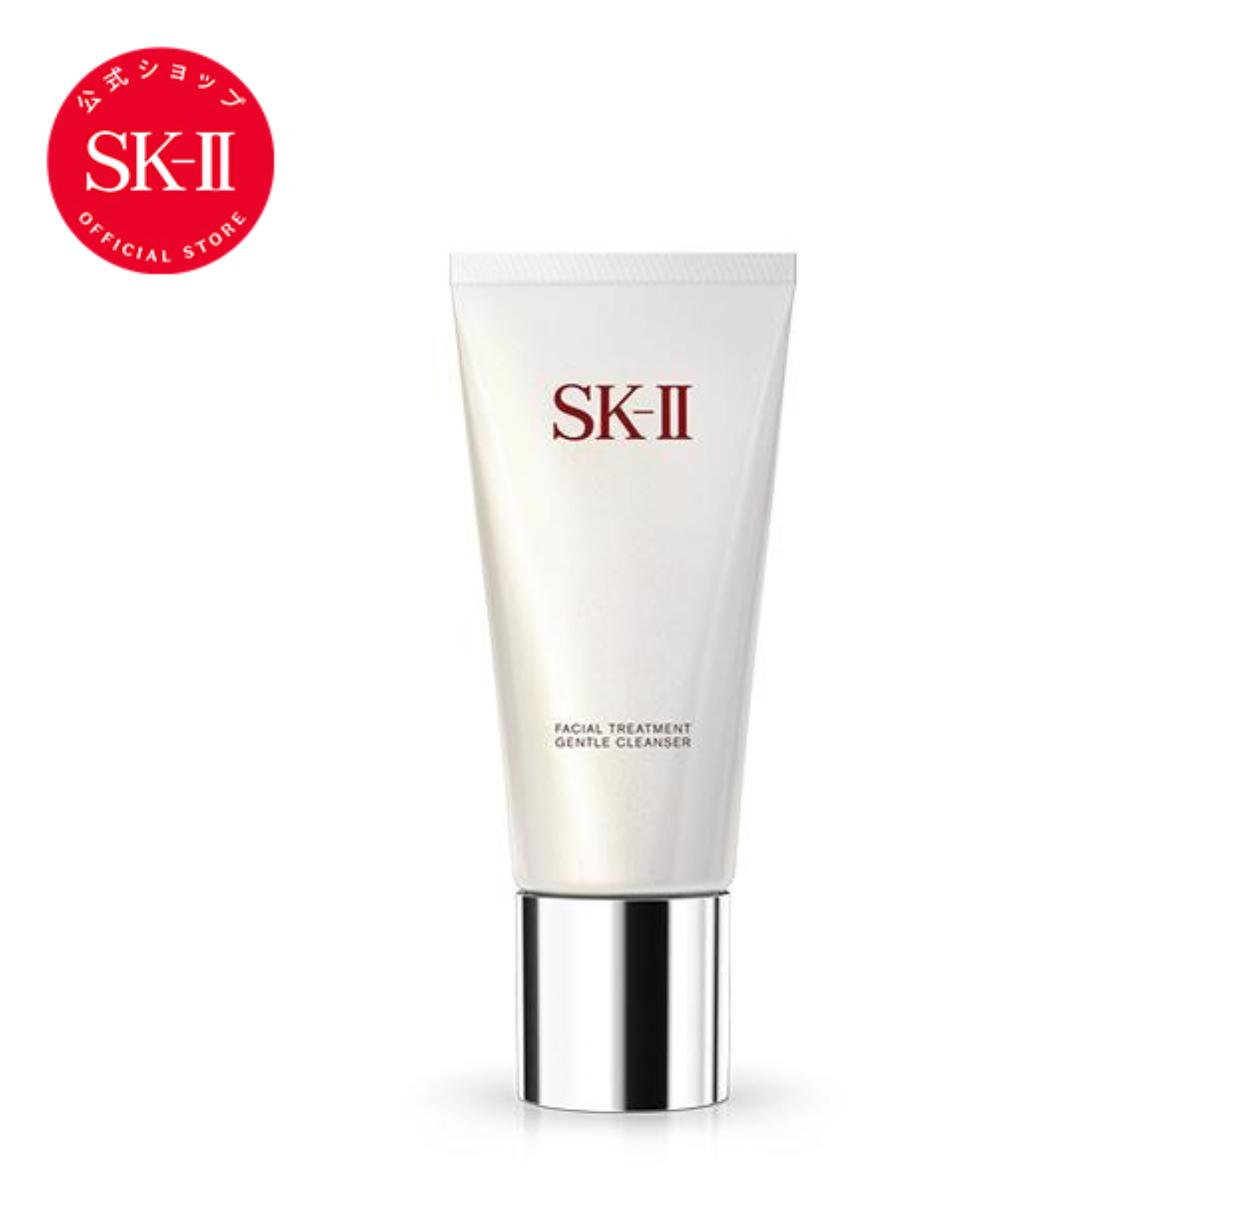 SK-II Facial Treatment Gentle Cleanser 120g - Moisturizing Cleanser - Serum Cleansing Foam